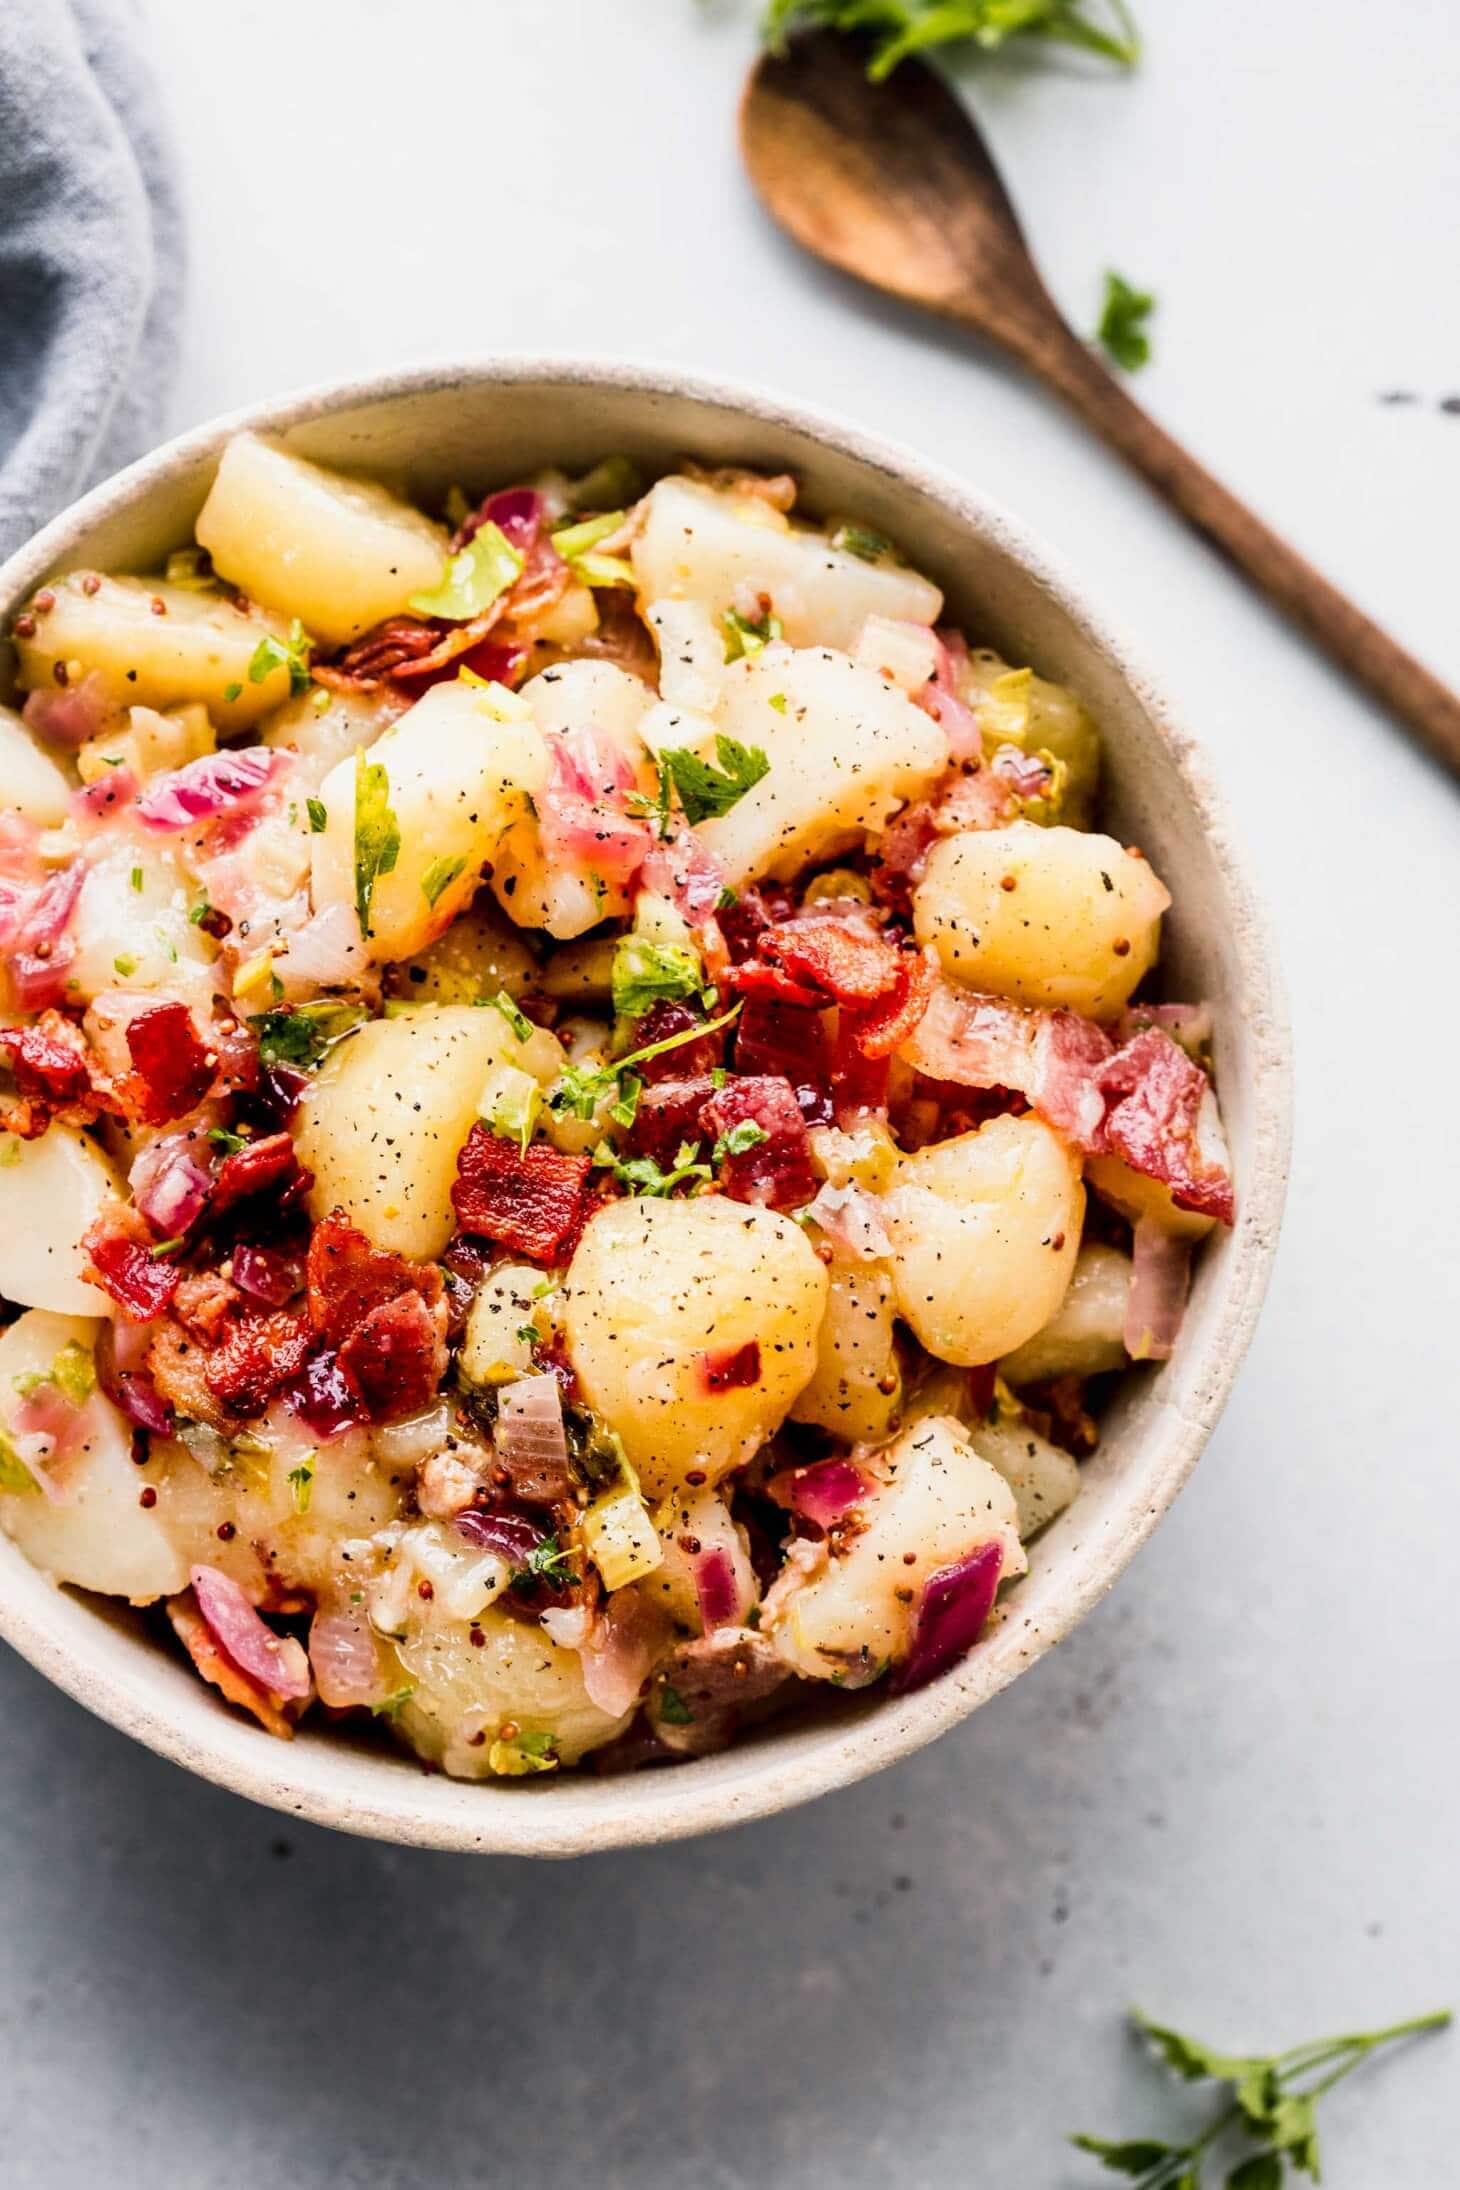 25Minute German Potato Salad (Warm Recipe!) « Clean & Delicious